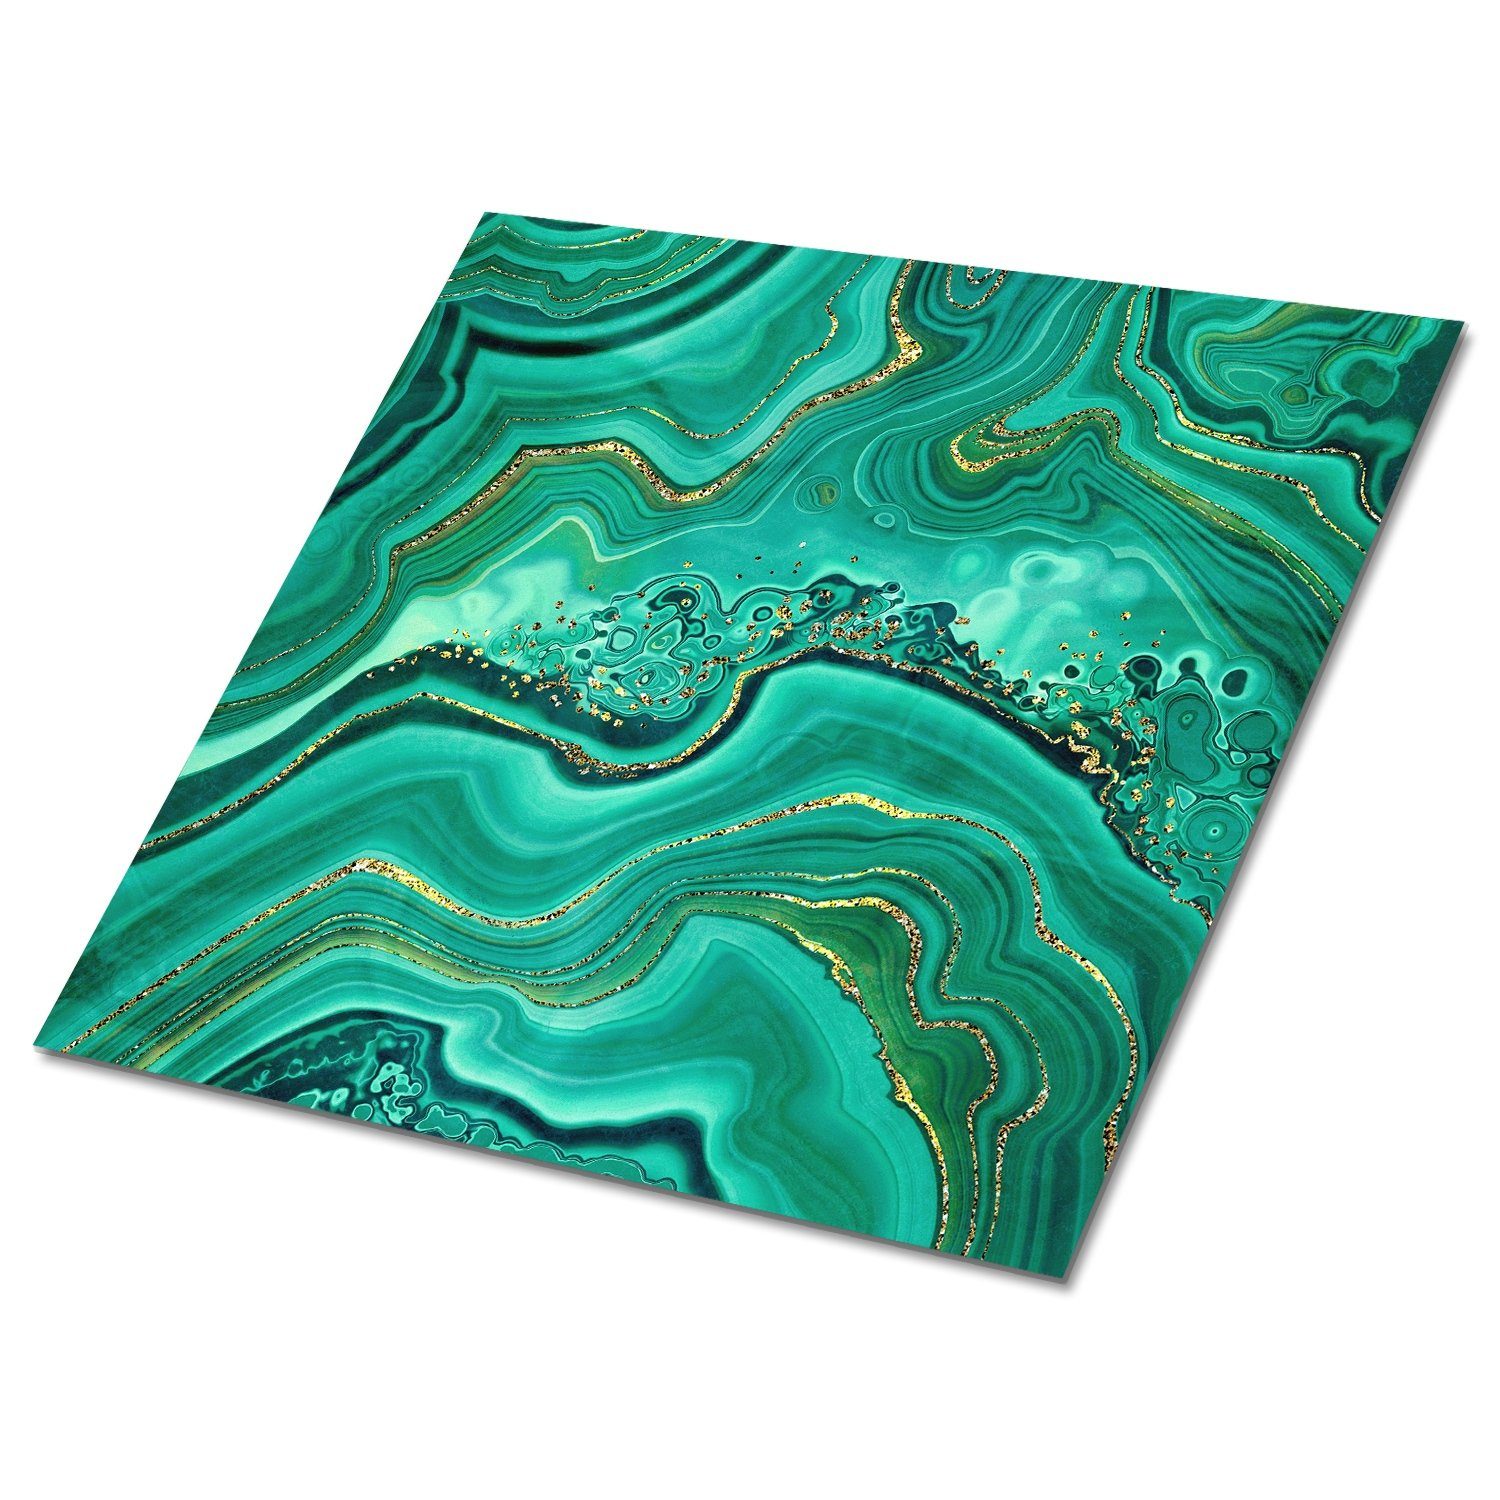 Tulup Vinylfliesen PVC Selbstklebende Fliesen Platten 30 cm x 30 cm Wandpaneele 9 Stück Malachit-Textur